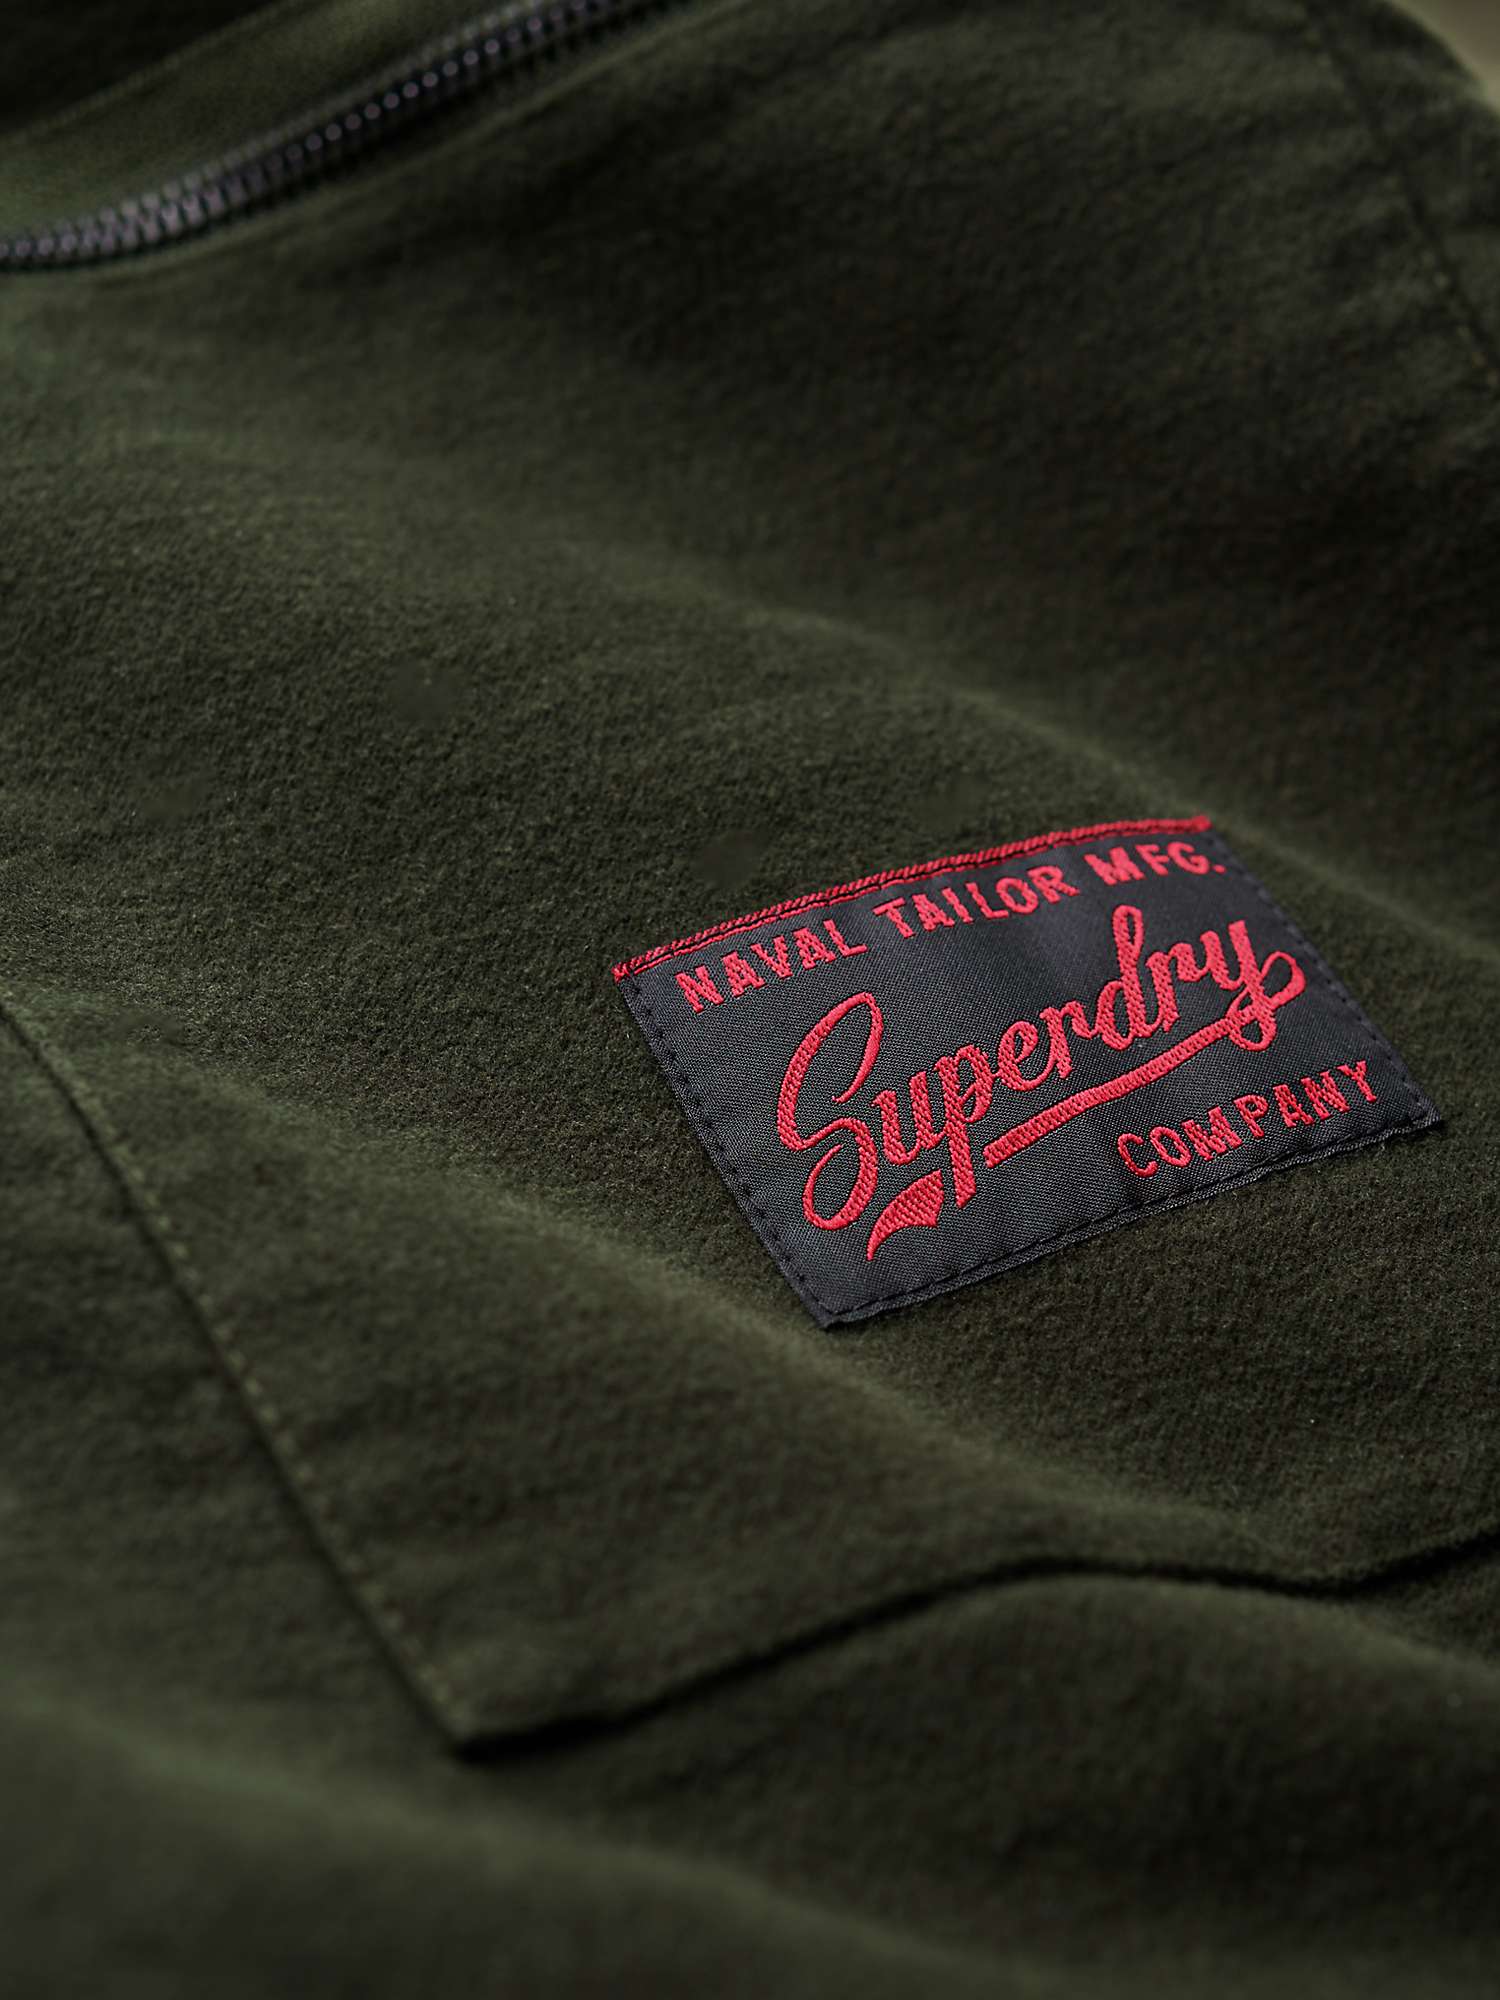 Buy Superdry The Merchant Store Moleskin Pea Coat, Surplus Goods Olive Online at johnlewis.com